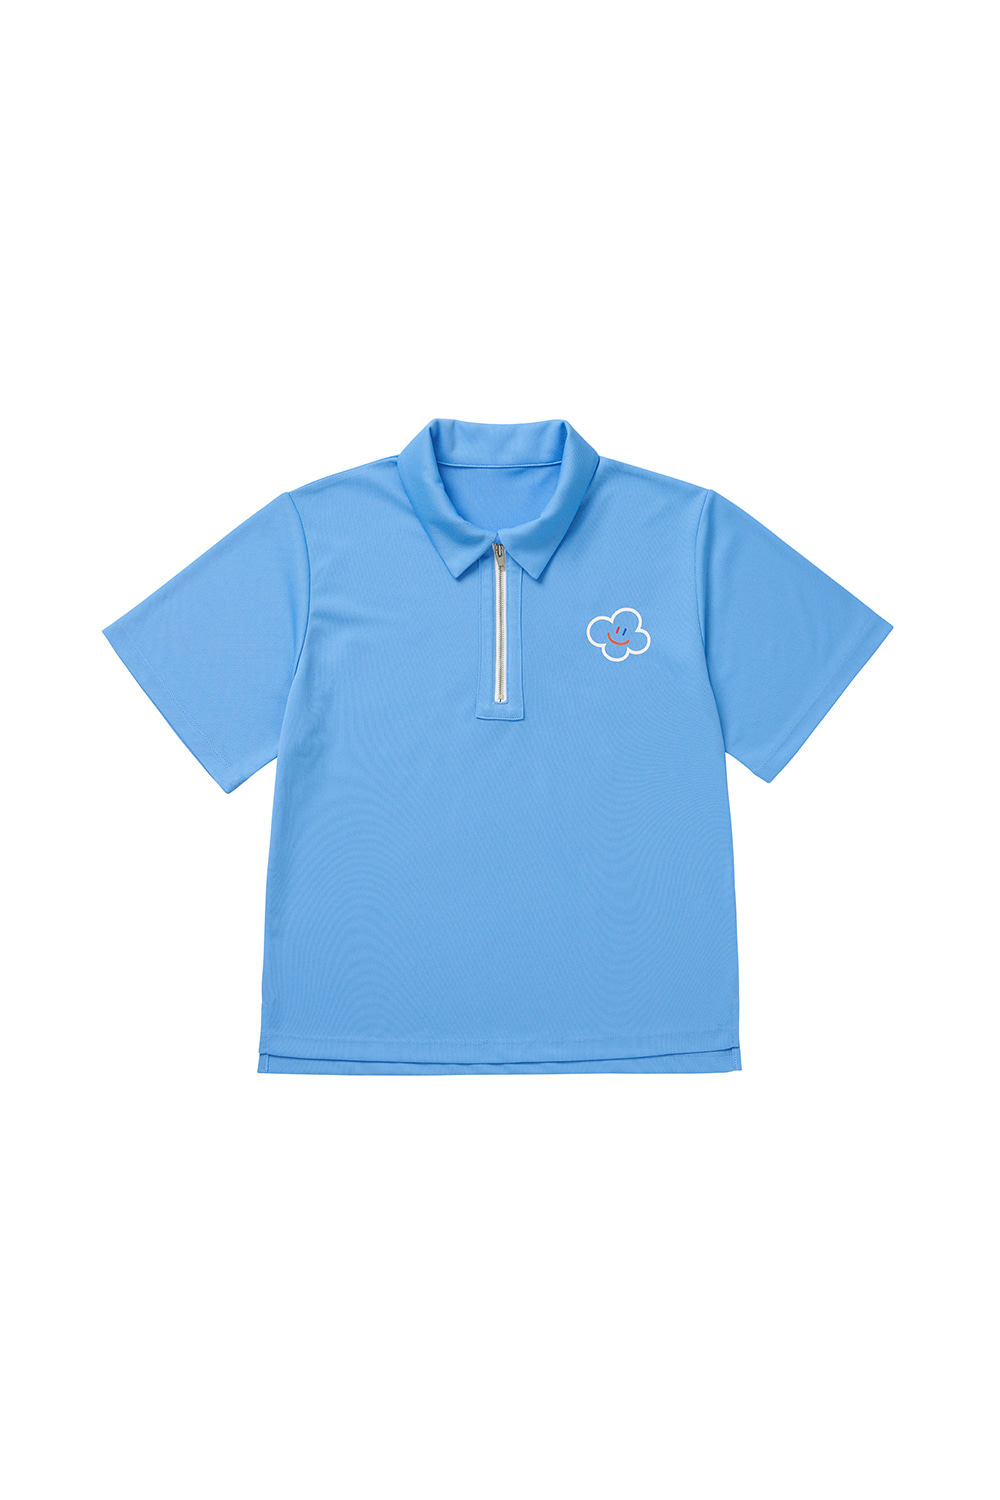 Hello LaLa Zip Up T-Shirts [Blue]